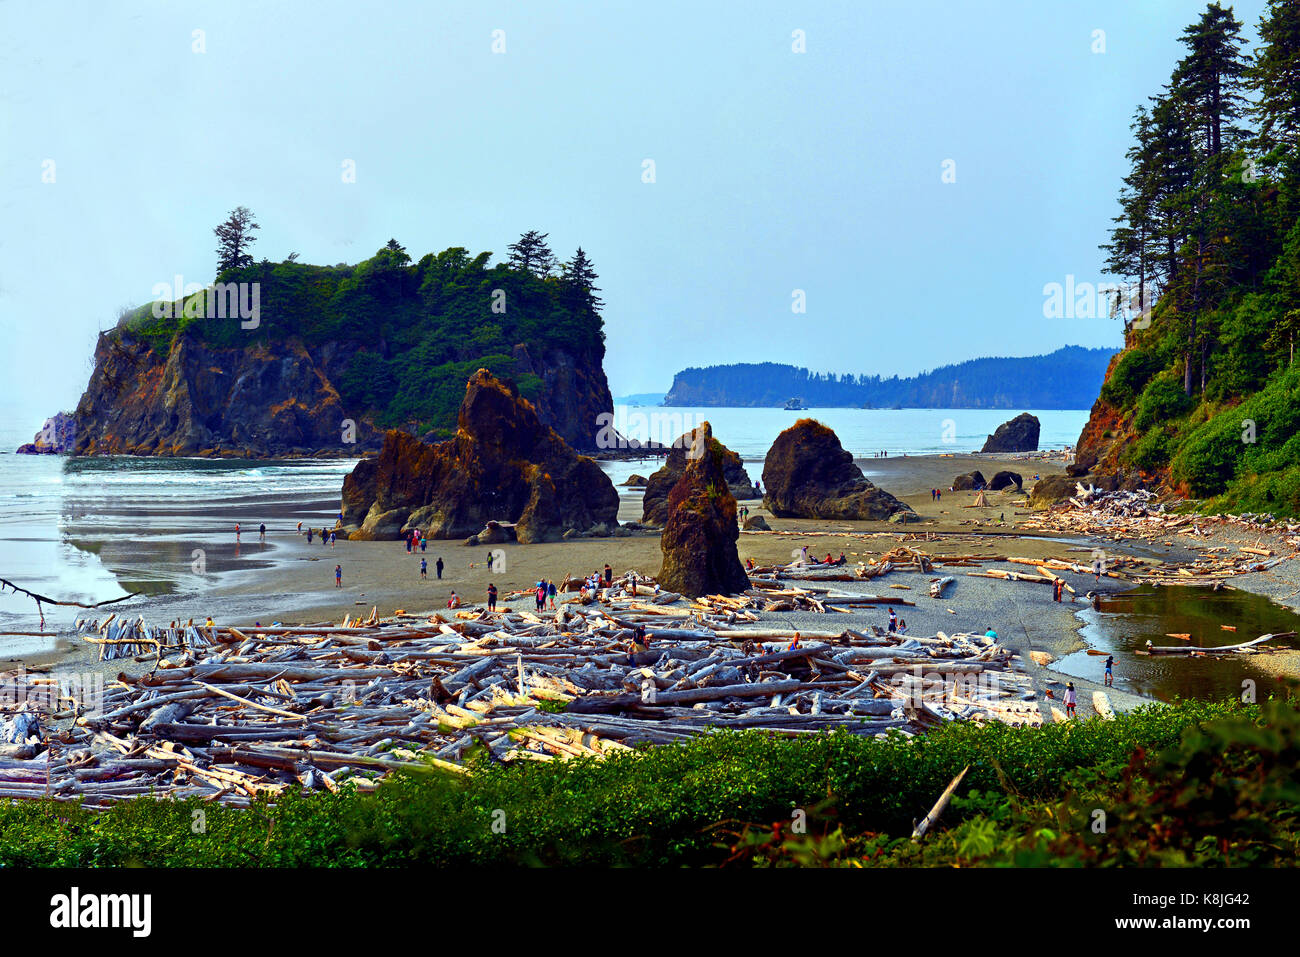 Wild and Scenic Washington State, USA Stock Photo